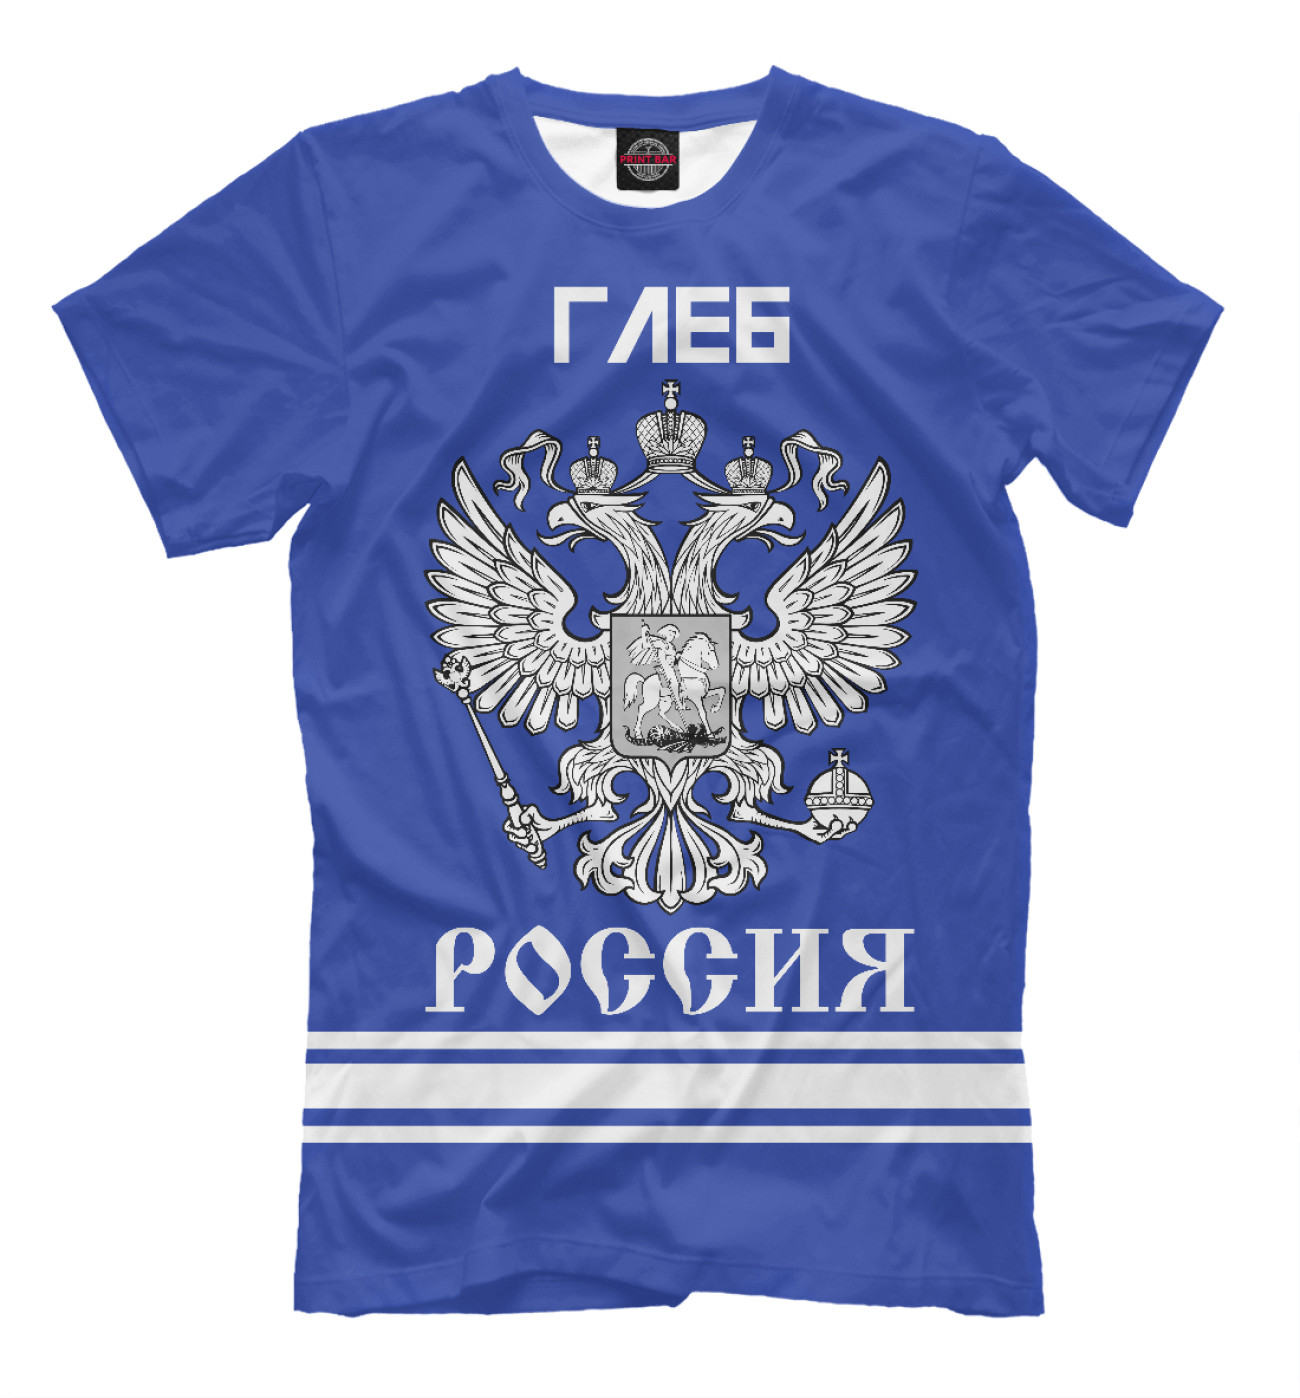 Мужская Футболка ГЛЕБ sport russia collection, артикул: IMR-429031-fut-2